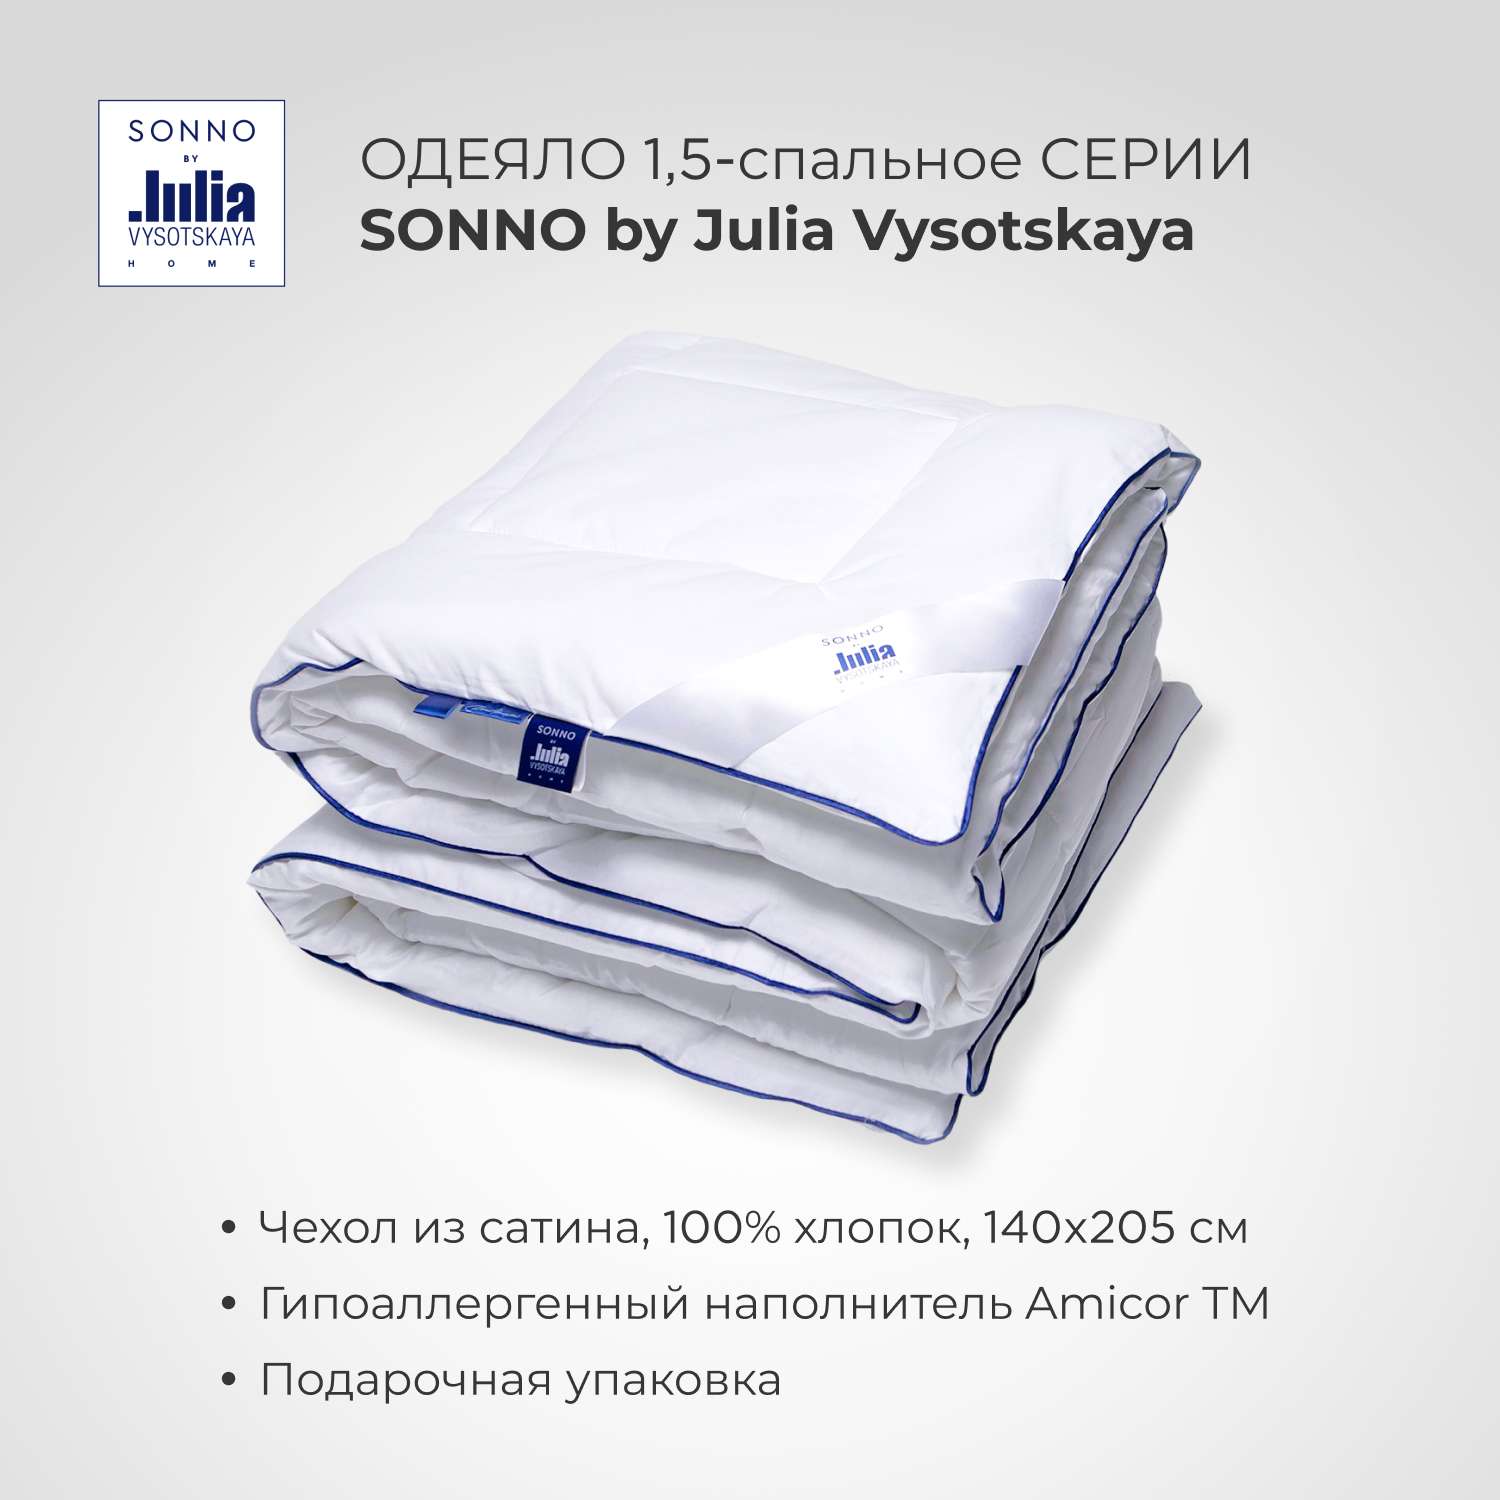 Одеяло SONNO by Julia Vysotskaya 1.5-спальное 140х205 см - фото 1